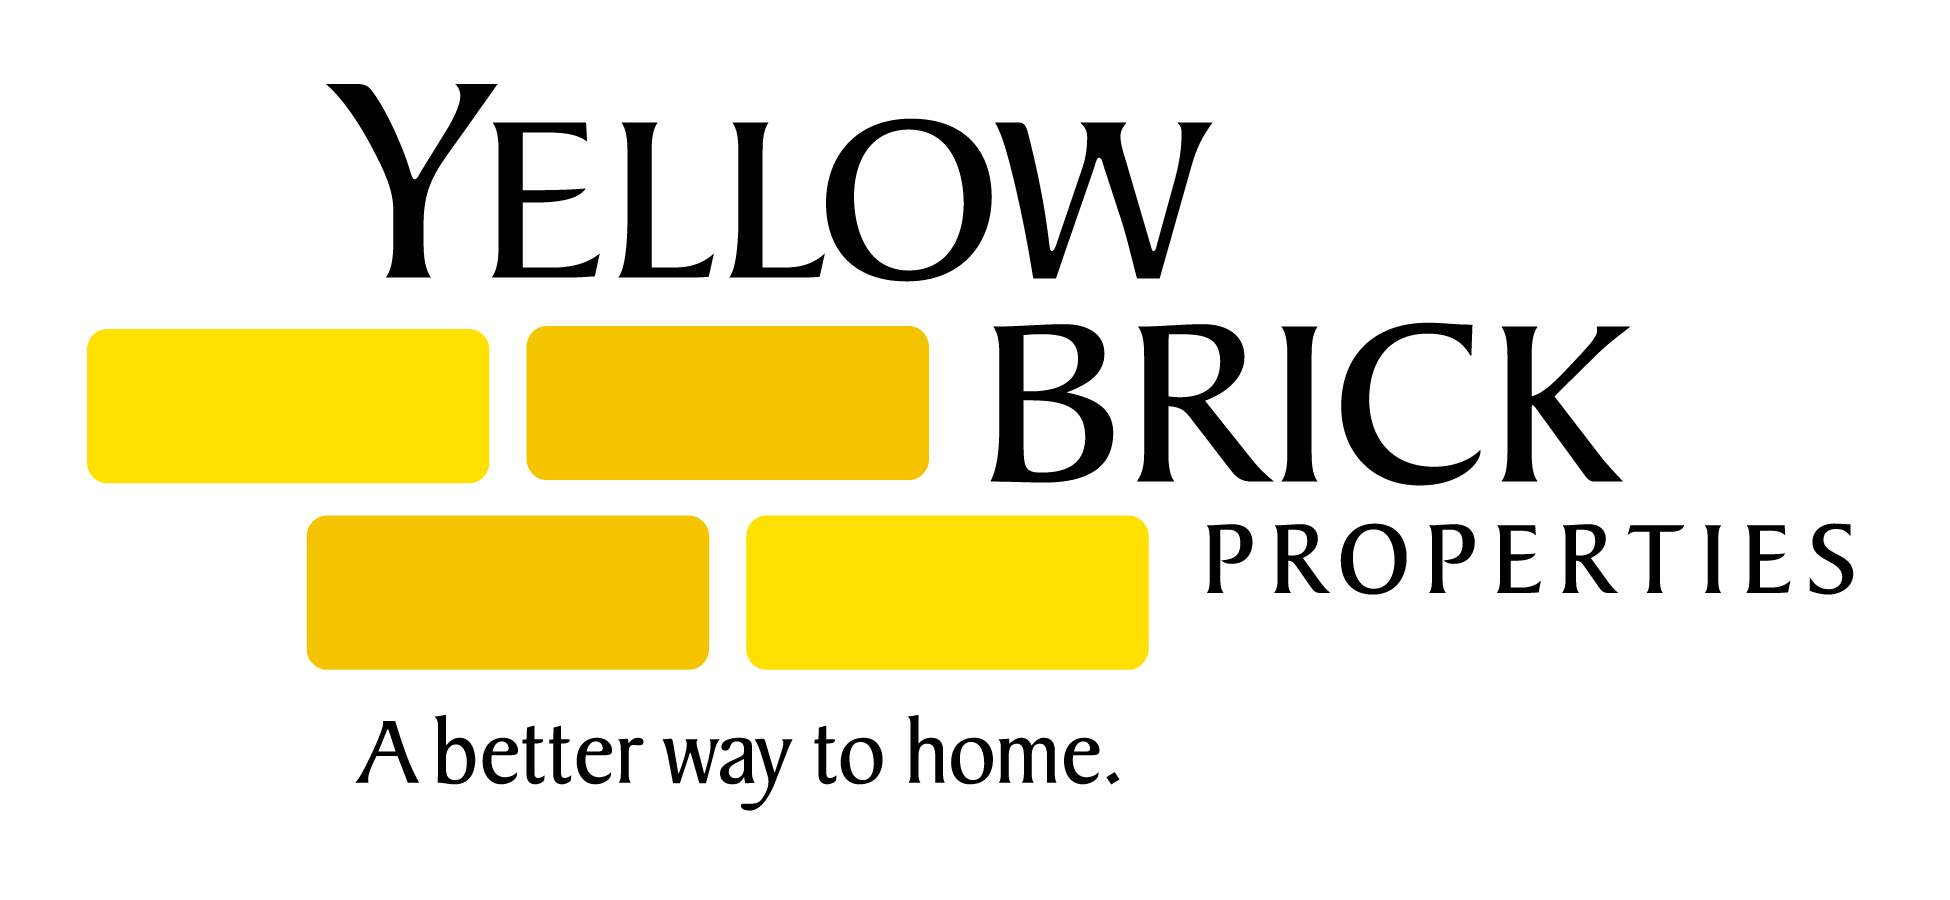 Yellow Brick Properties, LLC company logo